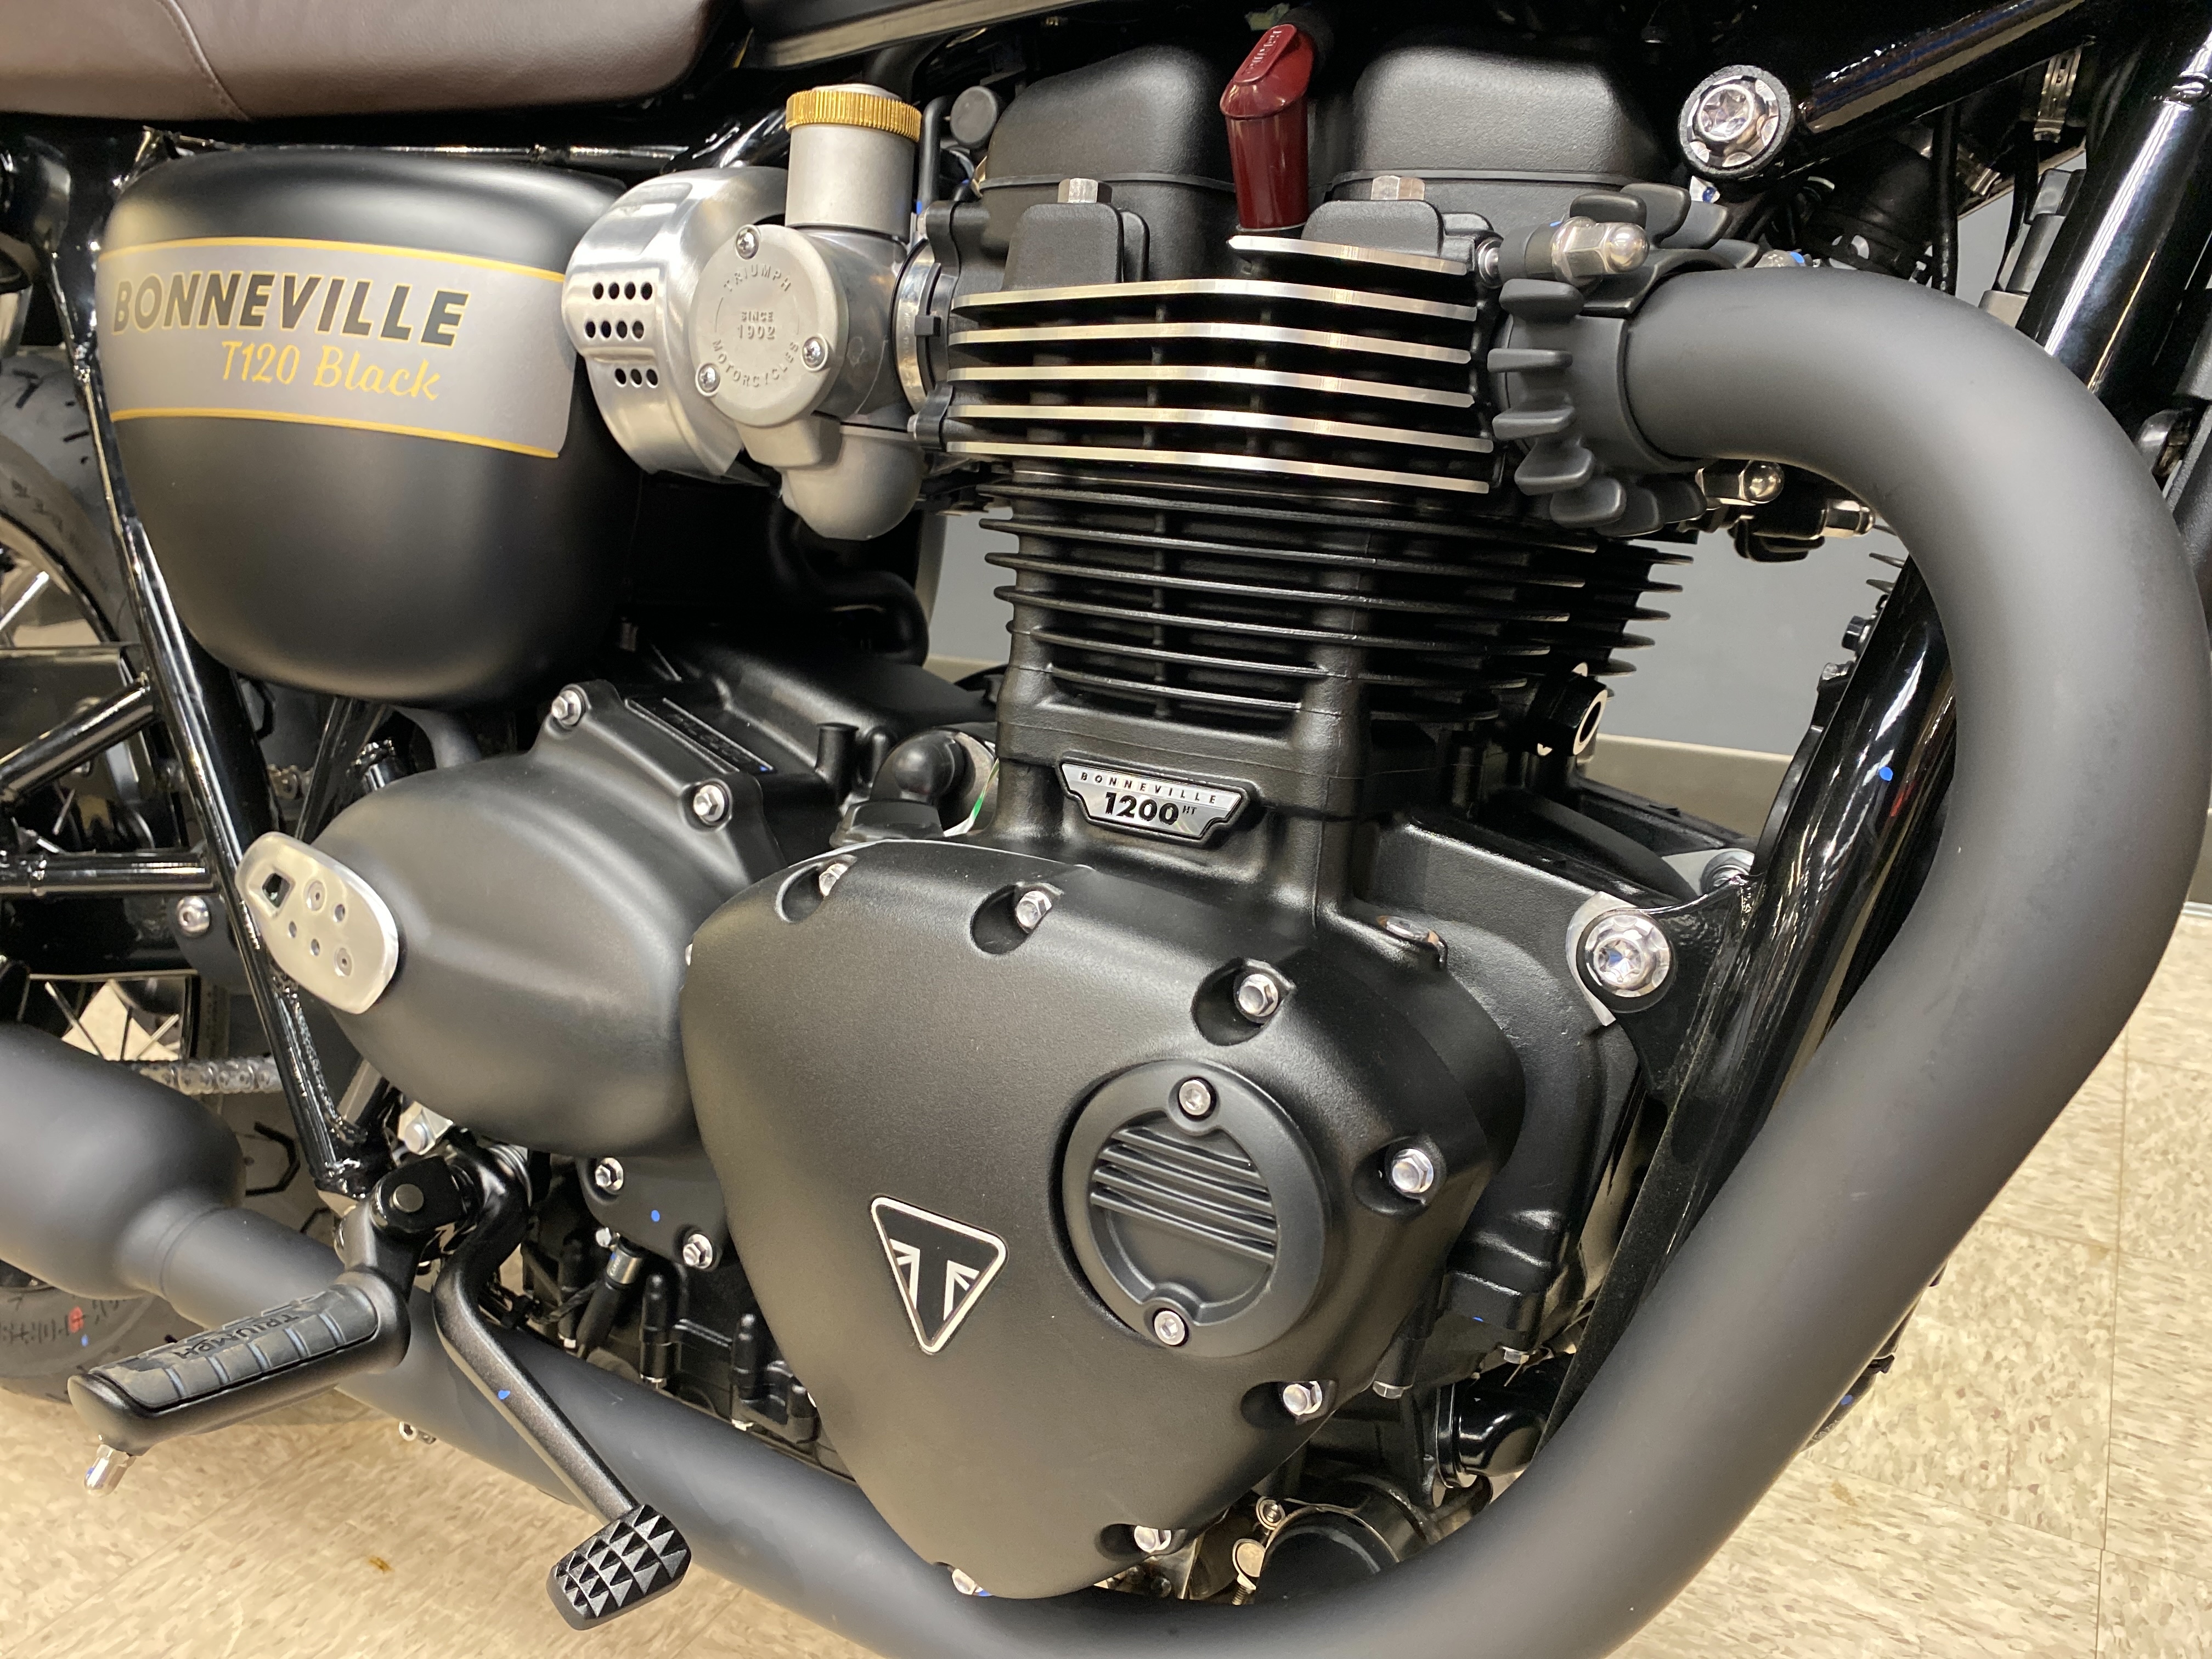 2022 Triumph Bonneville T120 Black at Sloans Motorcycle ATV, Murfreesboro, TN, 37129